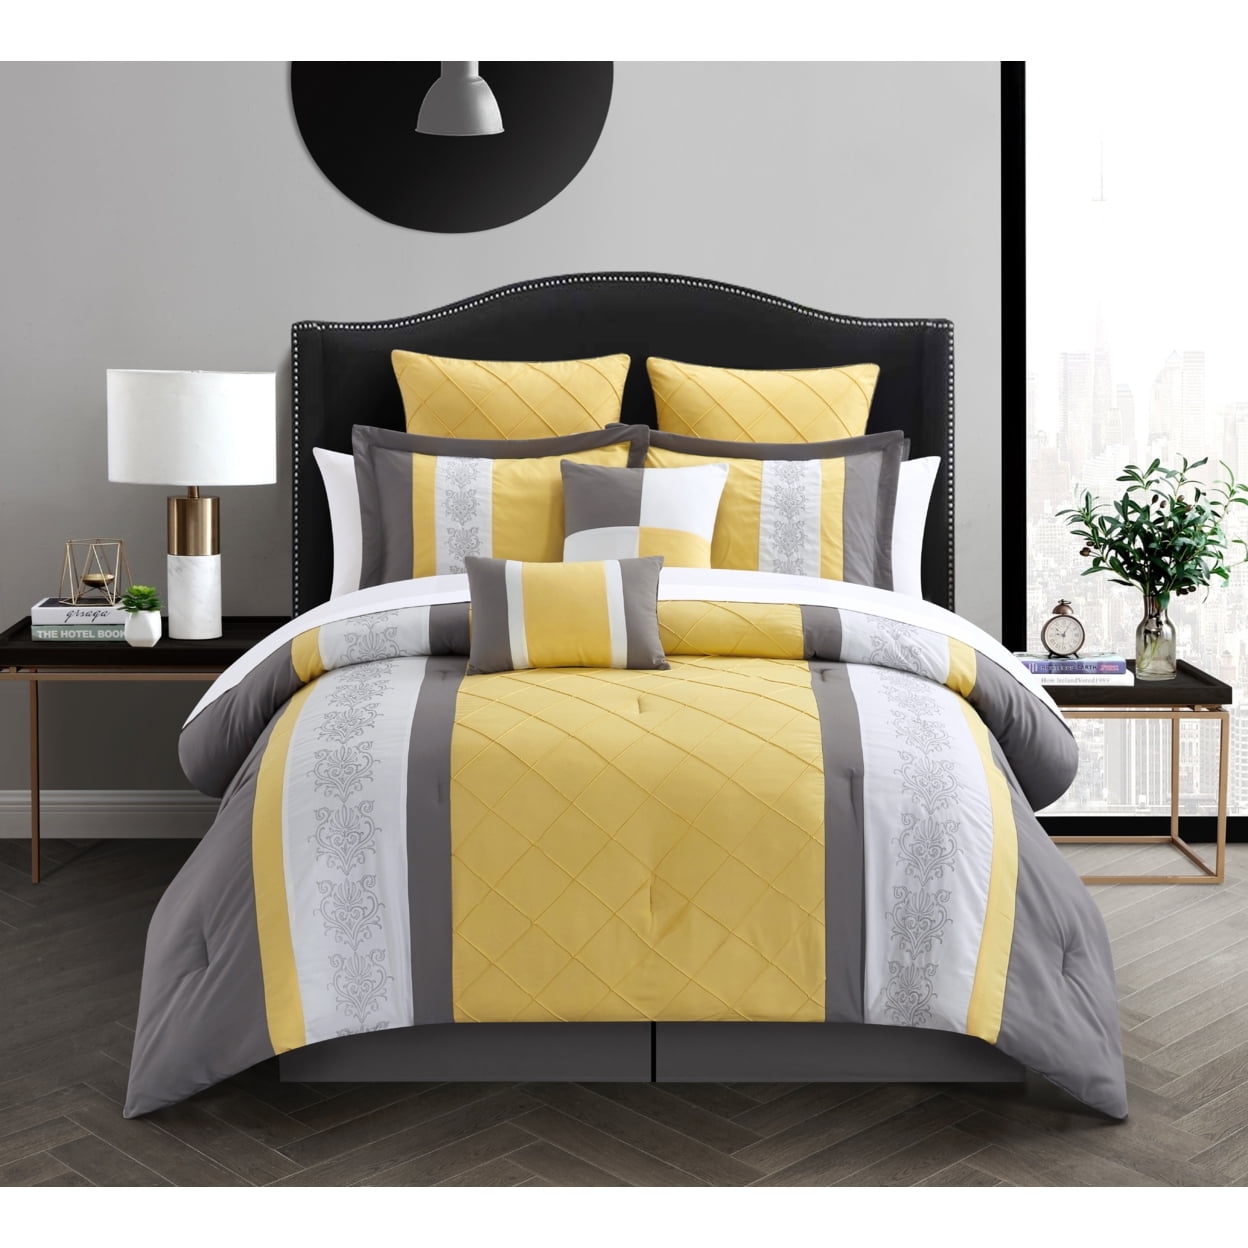 35ck111-us Livingston Embroidered Comforter Set - Yellow - King - 8 Piece